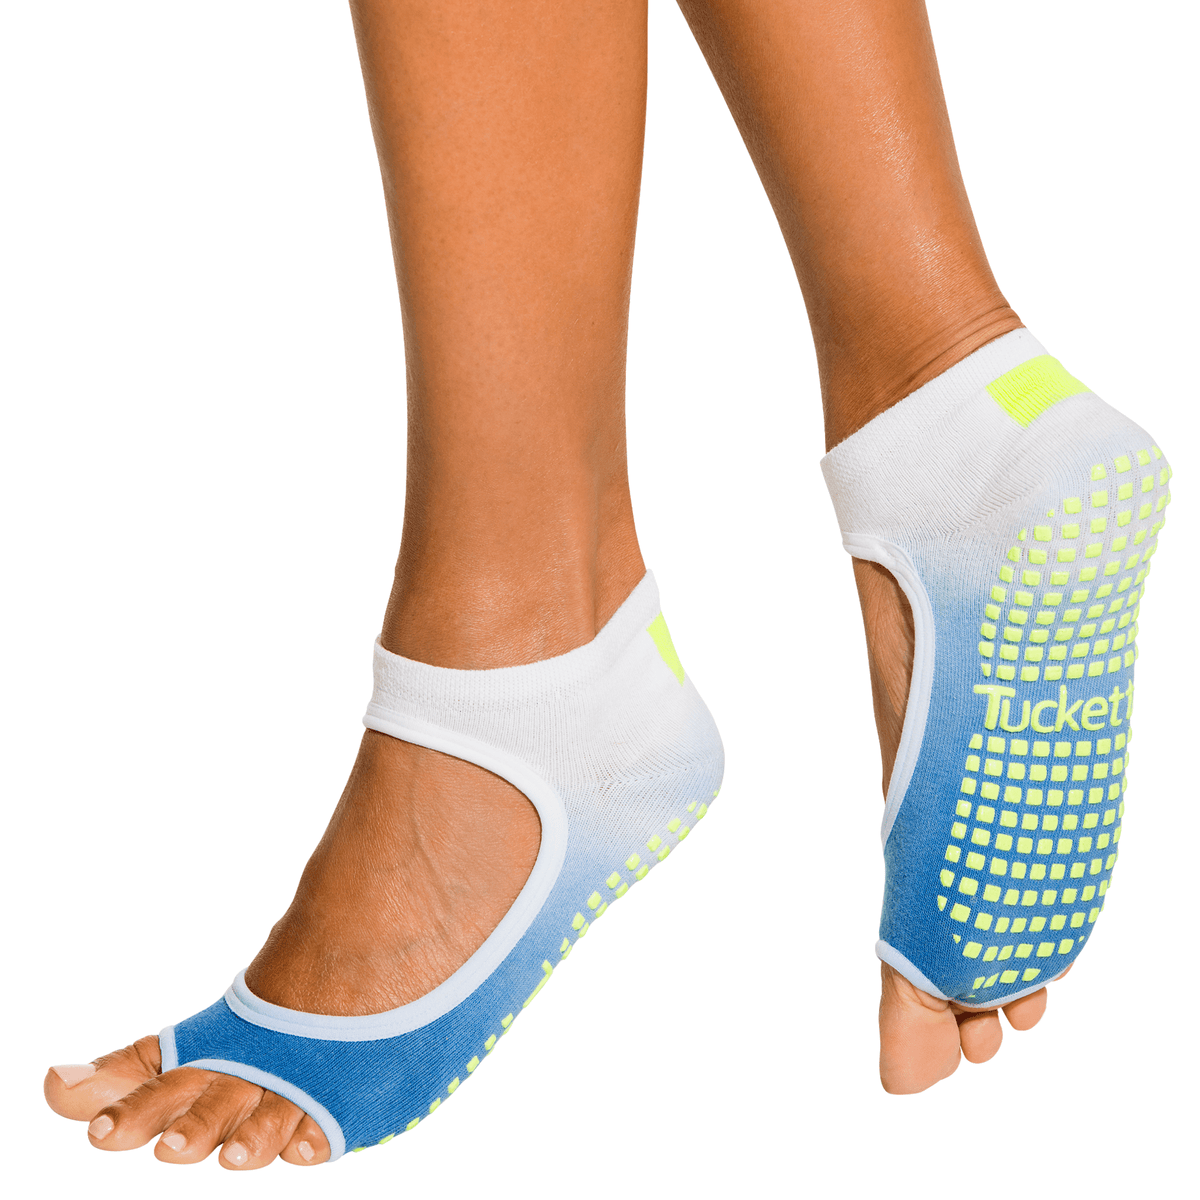 Tucketts Anklet Toeless Non-Slip Grip Socks - Anti Skid Yoga, Barre,  Pilates, Home & Leisure, Pedicure - L/XL - 1 pair Glacial Moraine Large